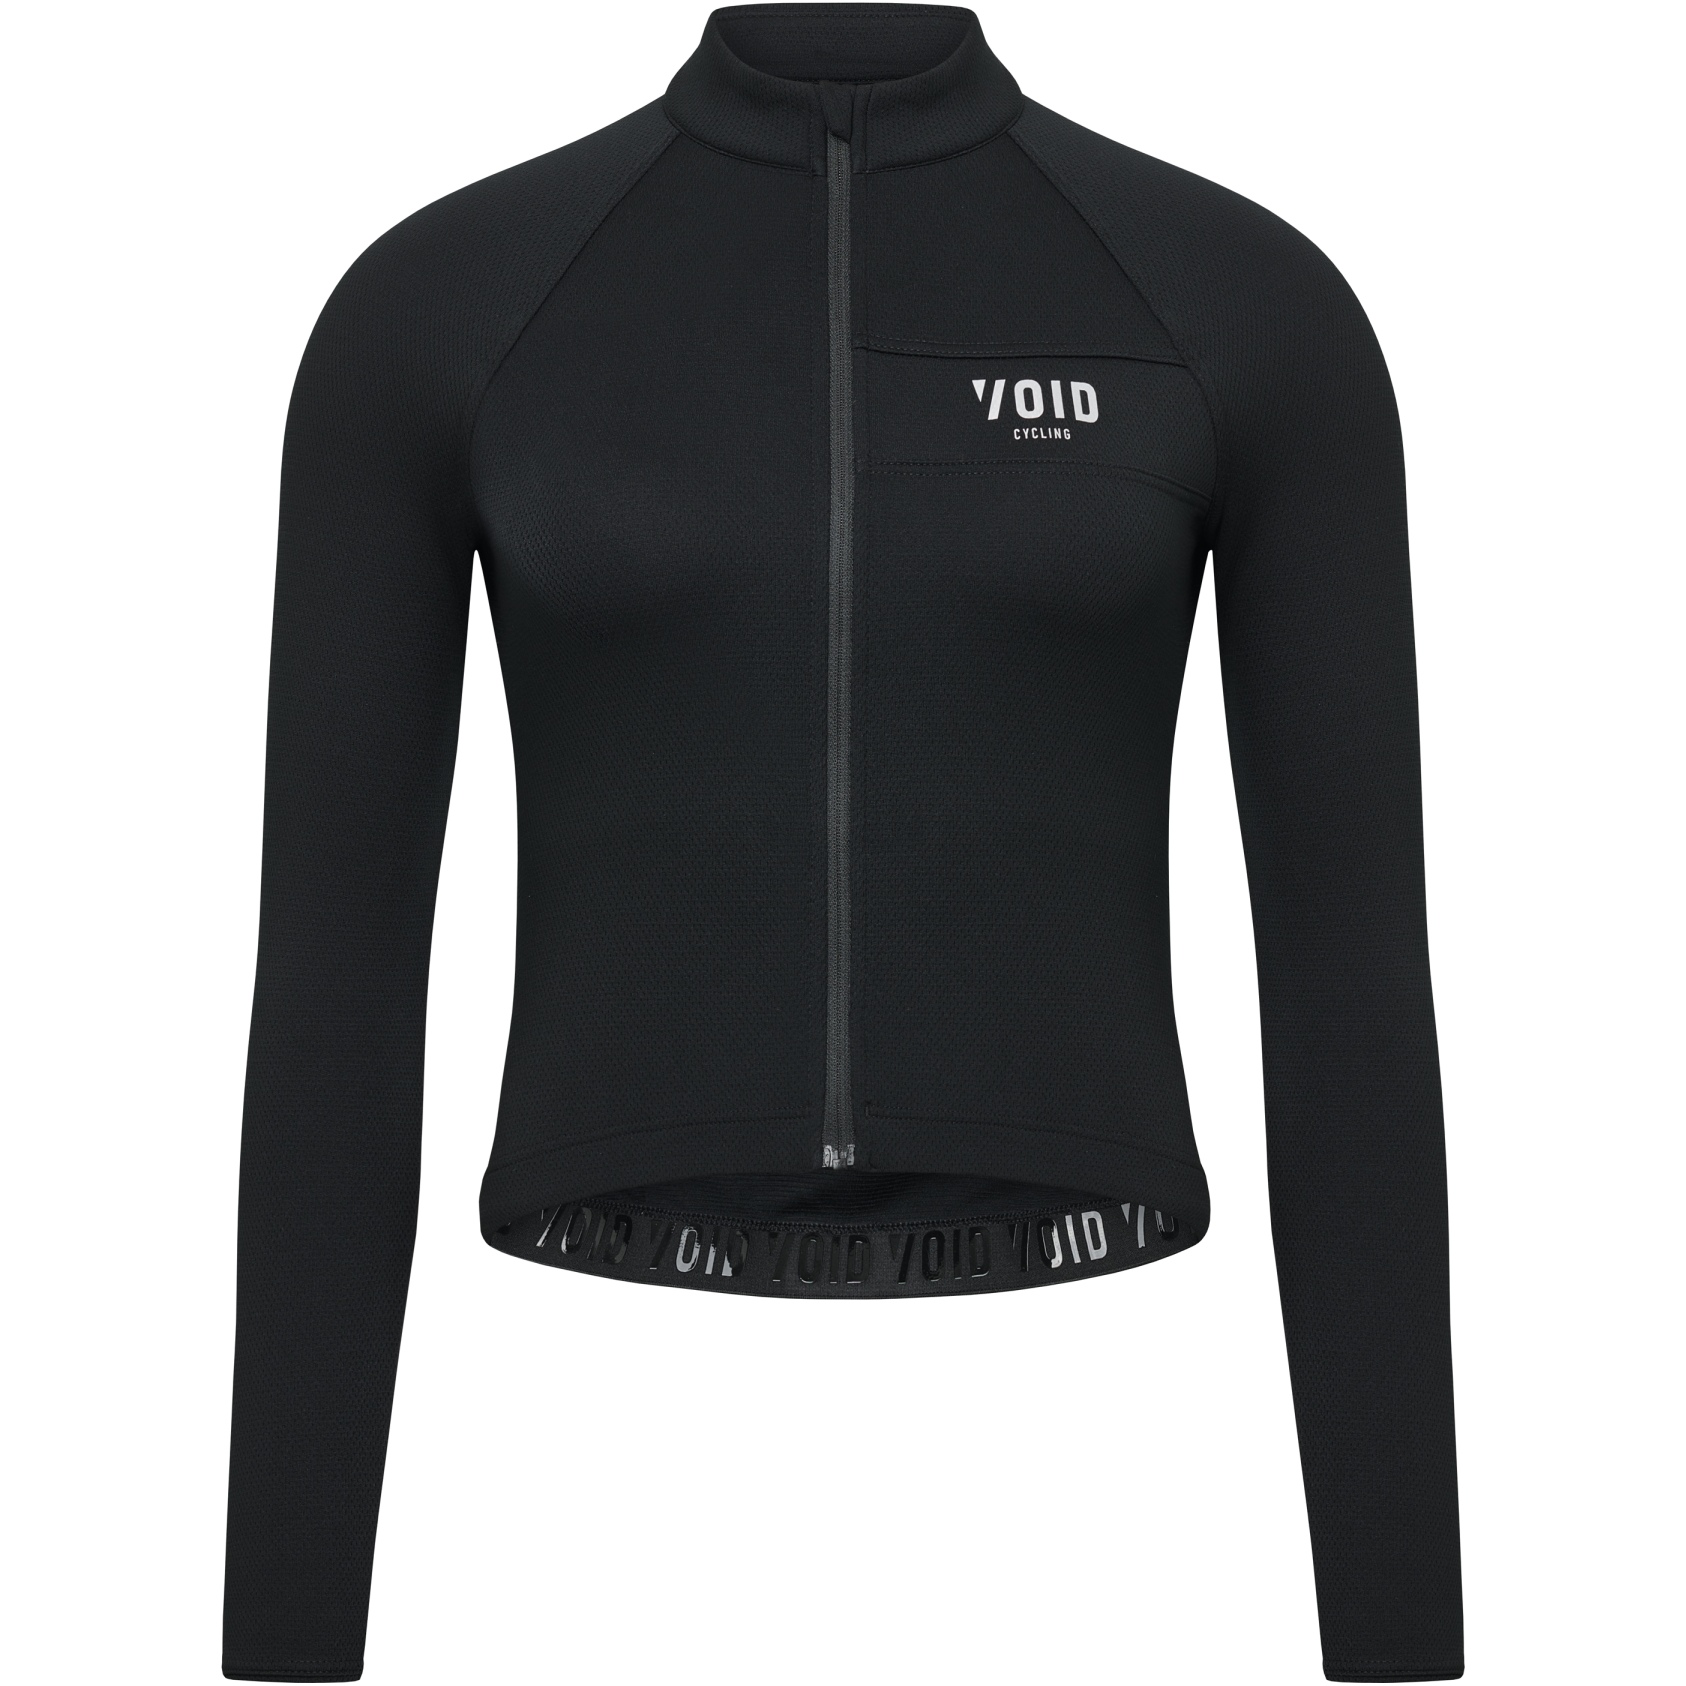 Productfoto van VOID Cycling Merino Women&#039;s Long Sleeve Jersey - Black